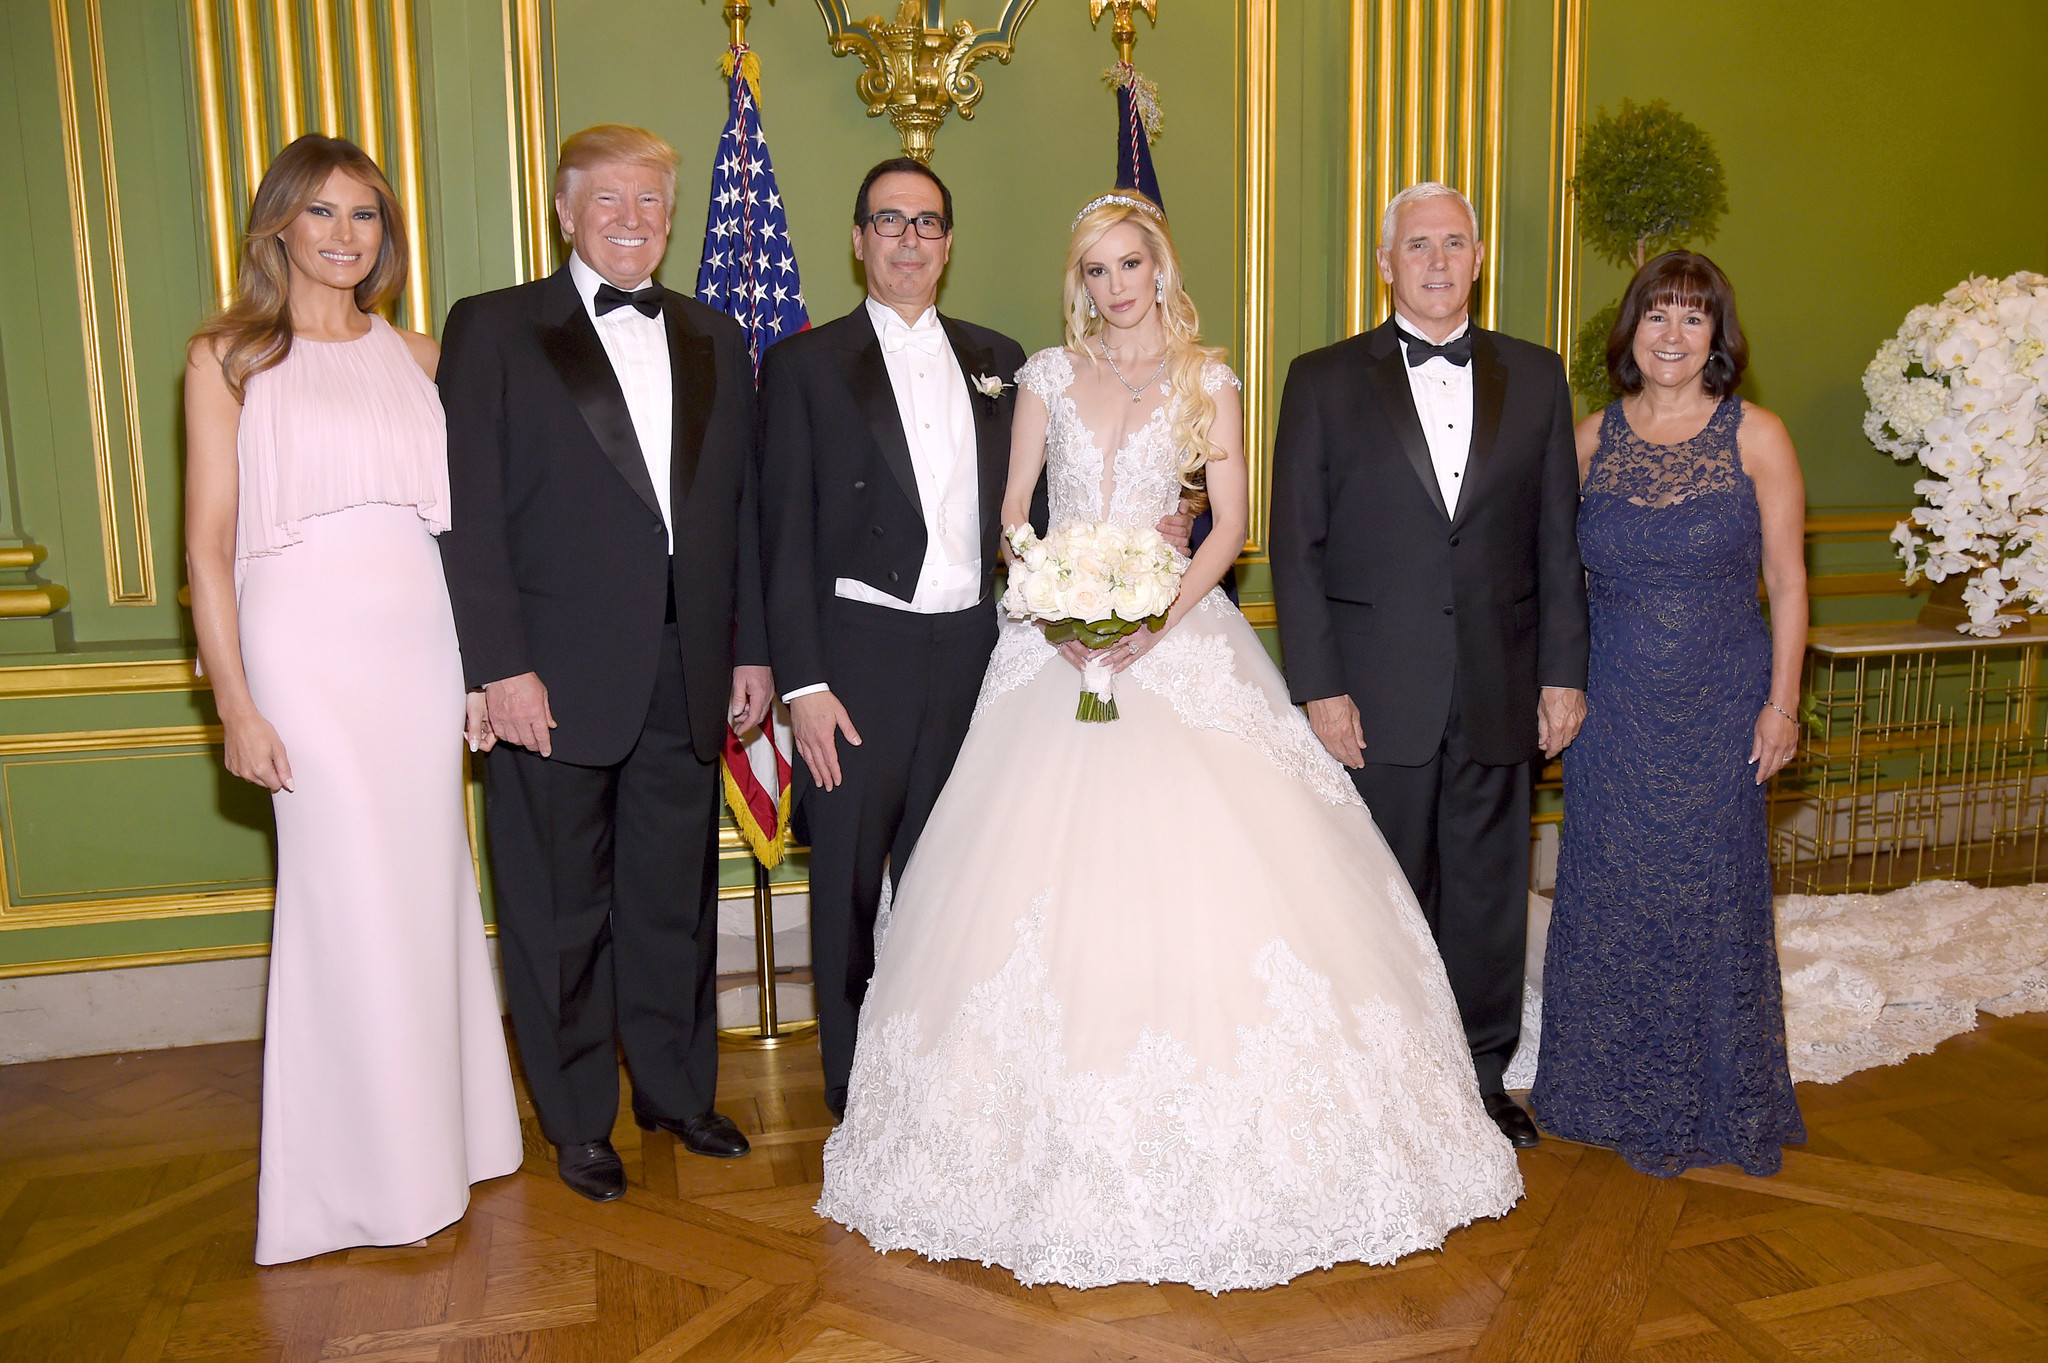 la-secretary-of-the-treasury-steven-mnuchin-and-louise-linton-wedding-20170624-1.jpg